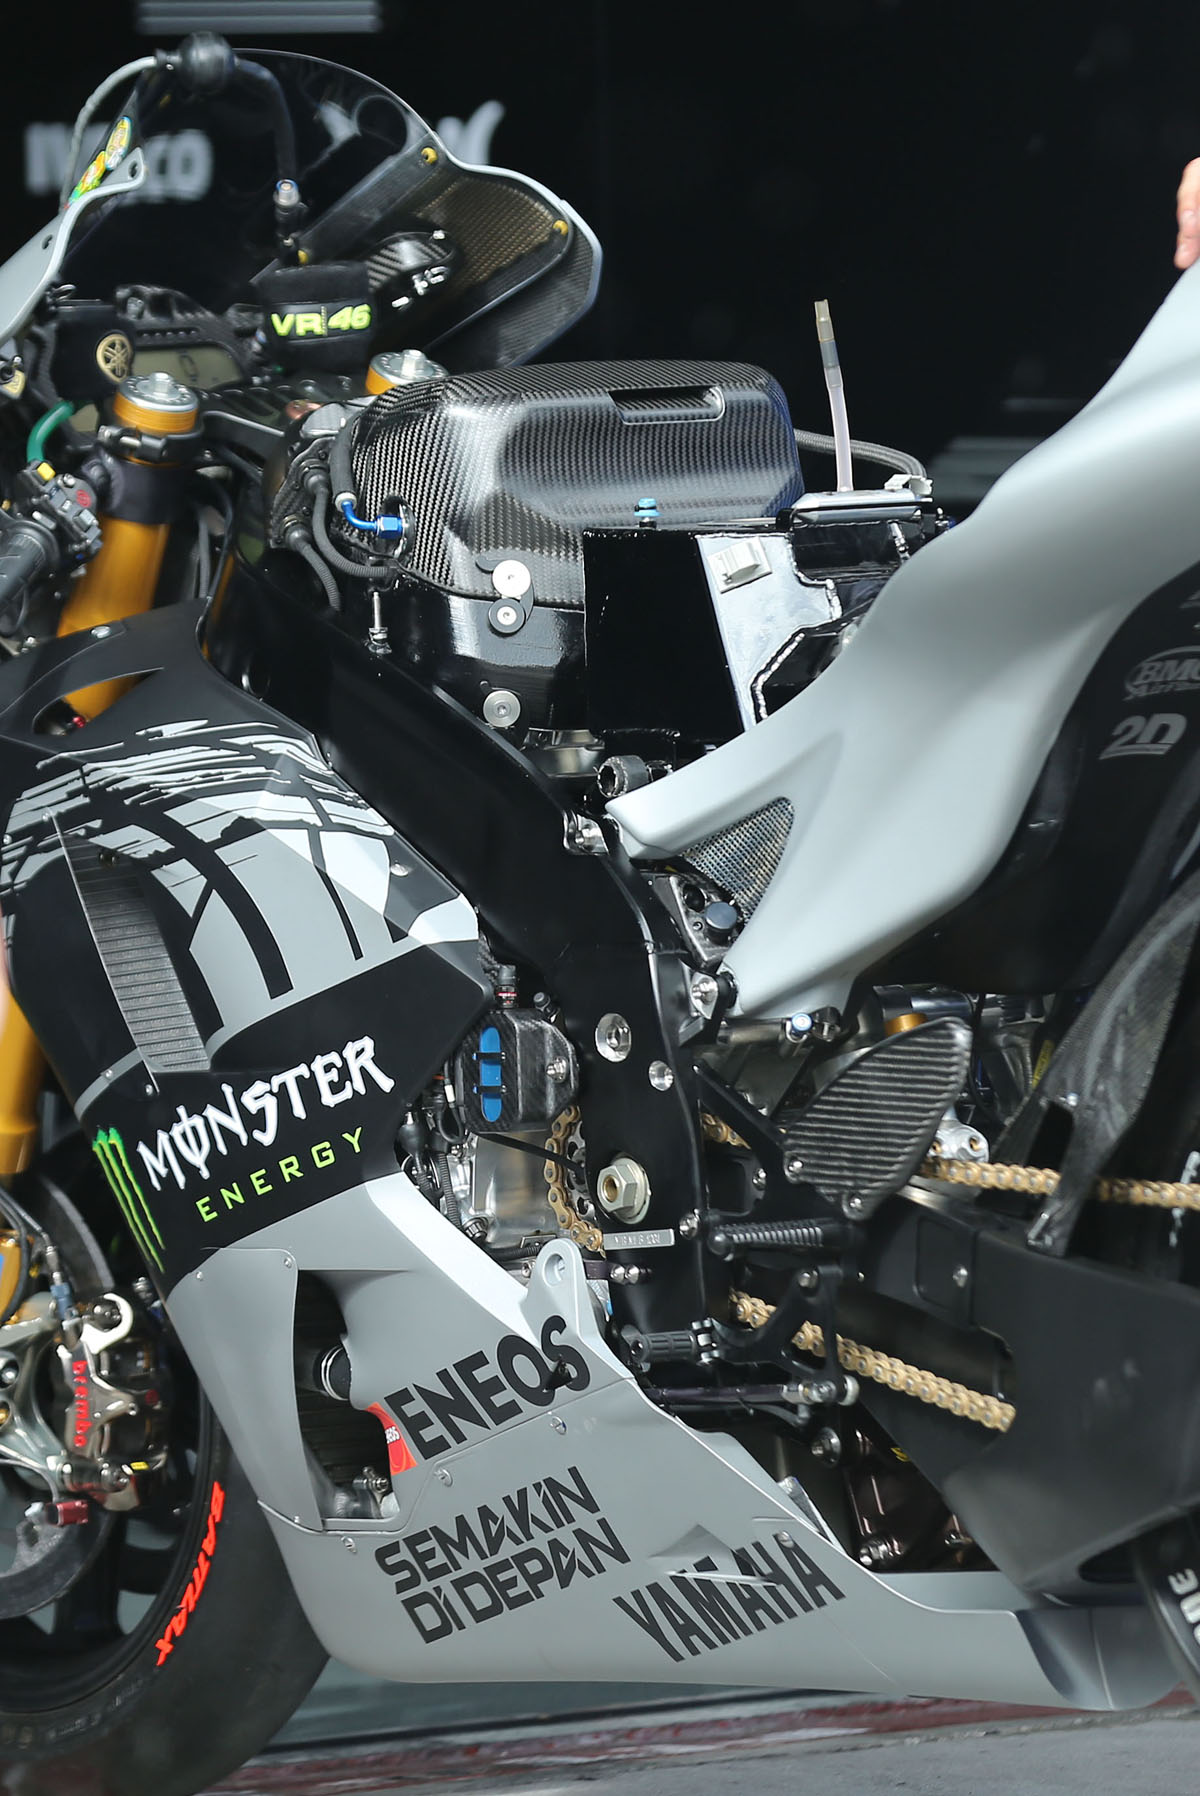 Rossi's test bike revealed